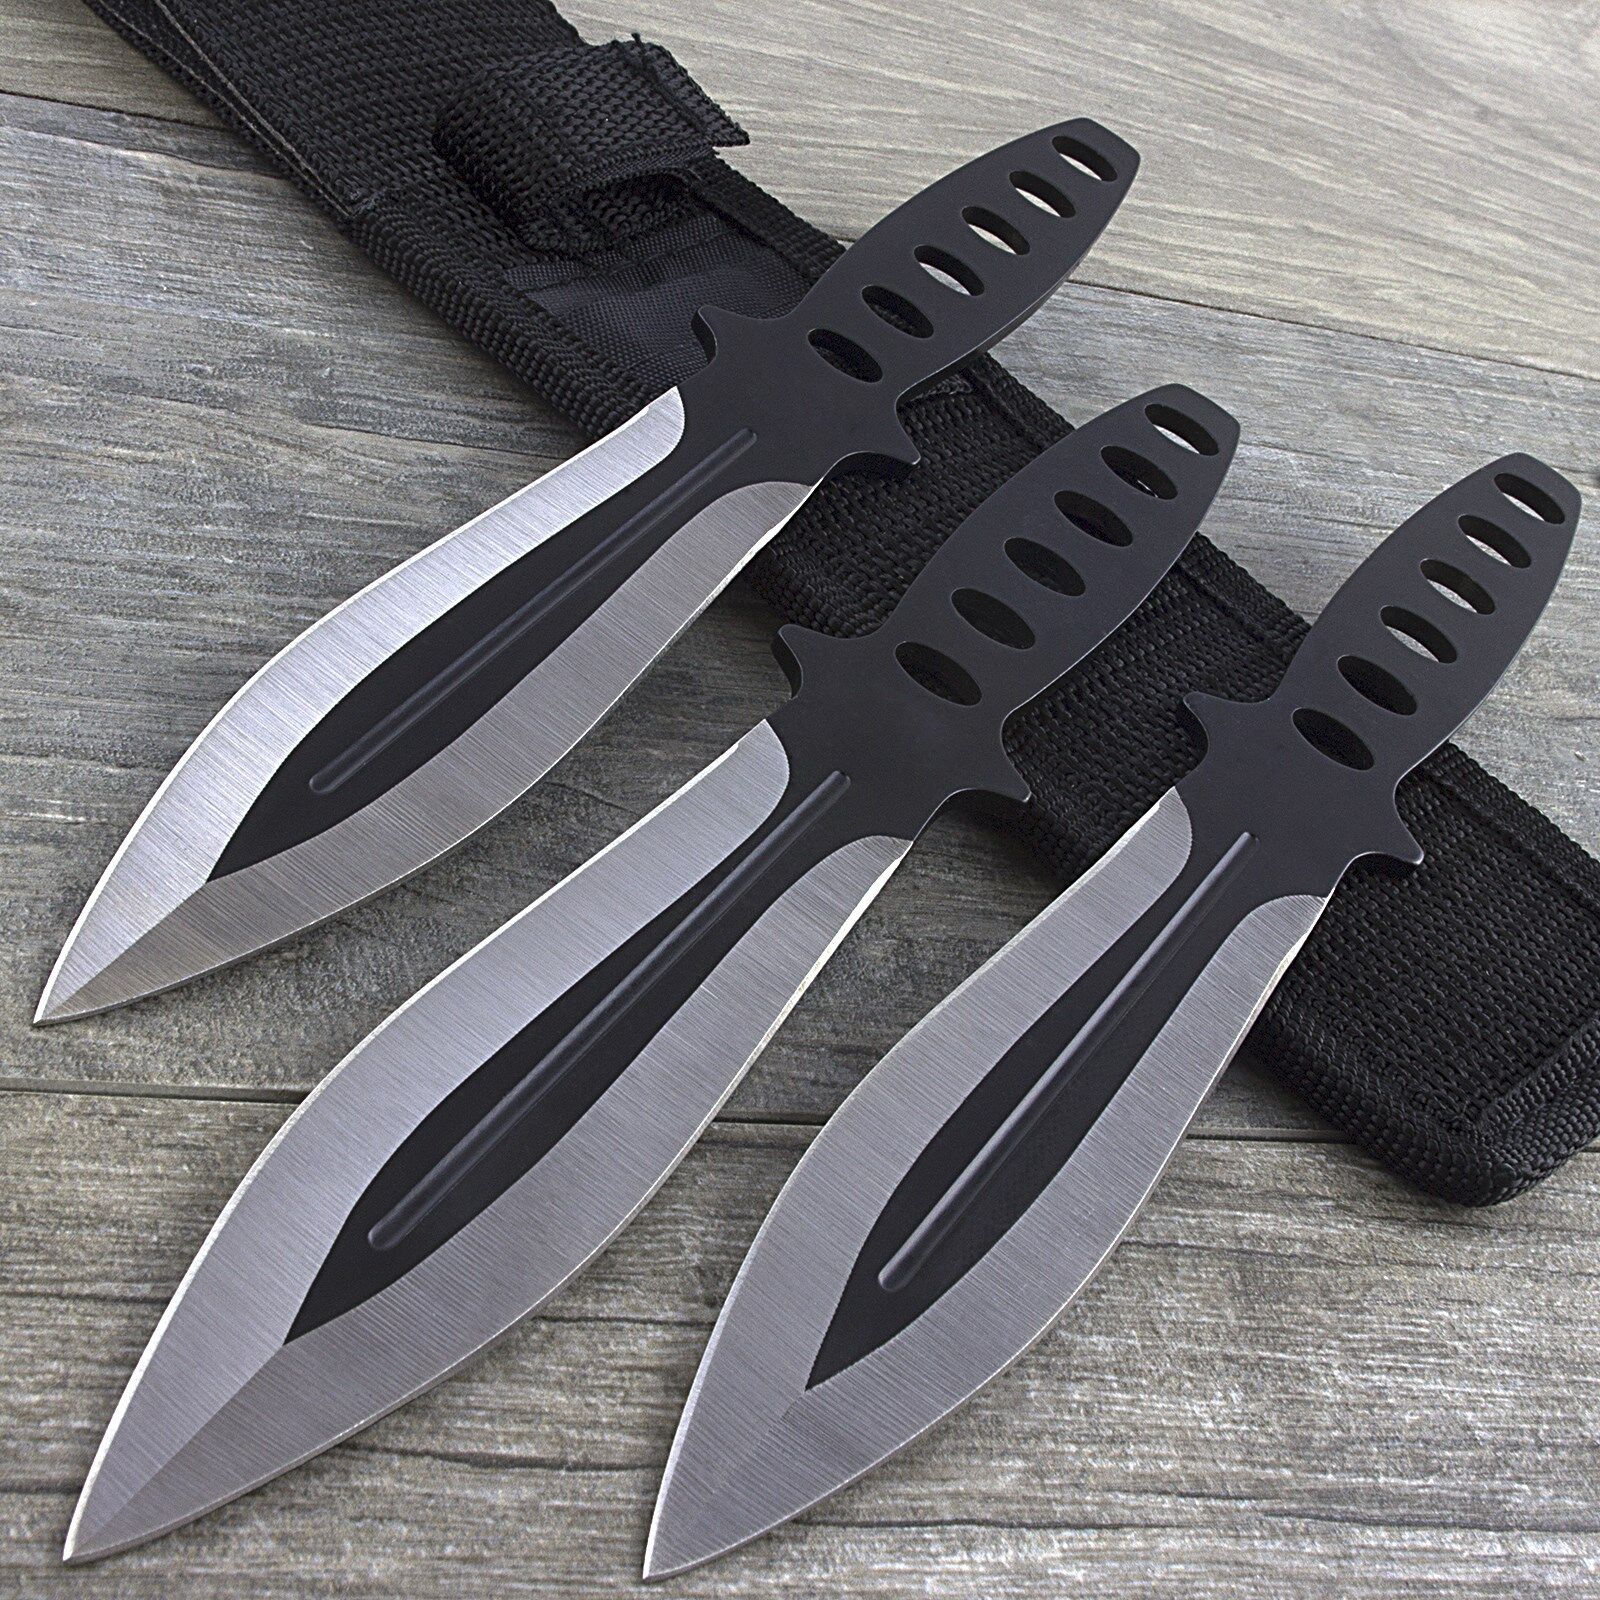 3 PC NINJA THROWING KNIVES SET w/ SHEATH Kunai Combat Tactical Hunting Knife